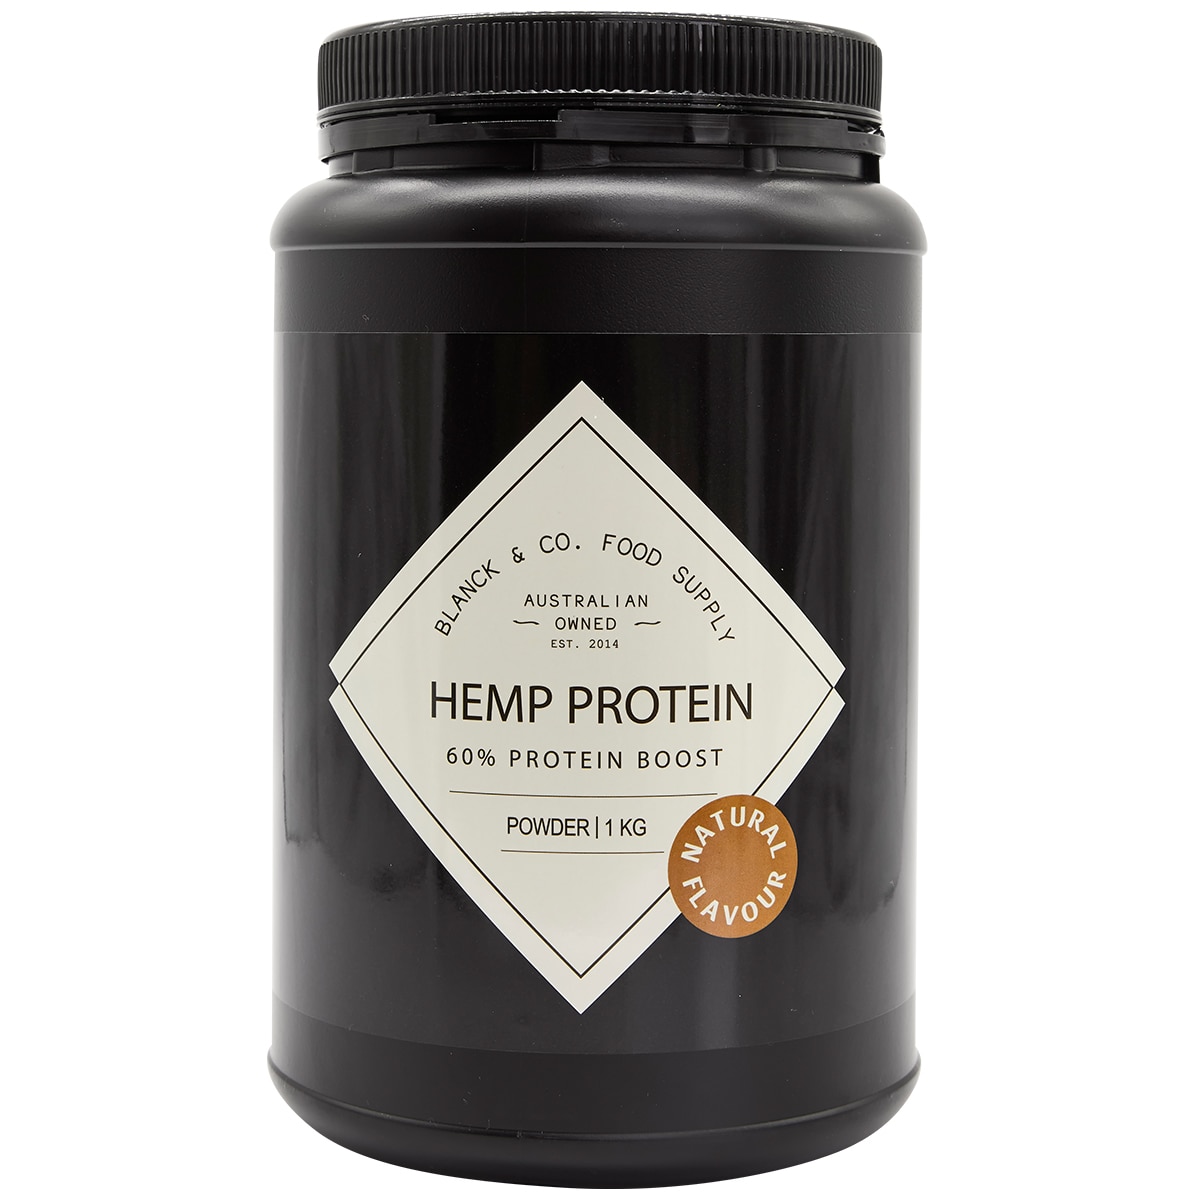 Blanck & CO Hemp Protein - Natural